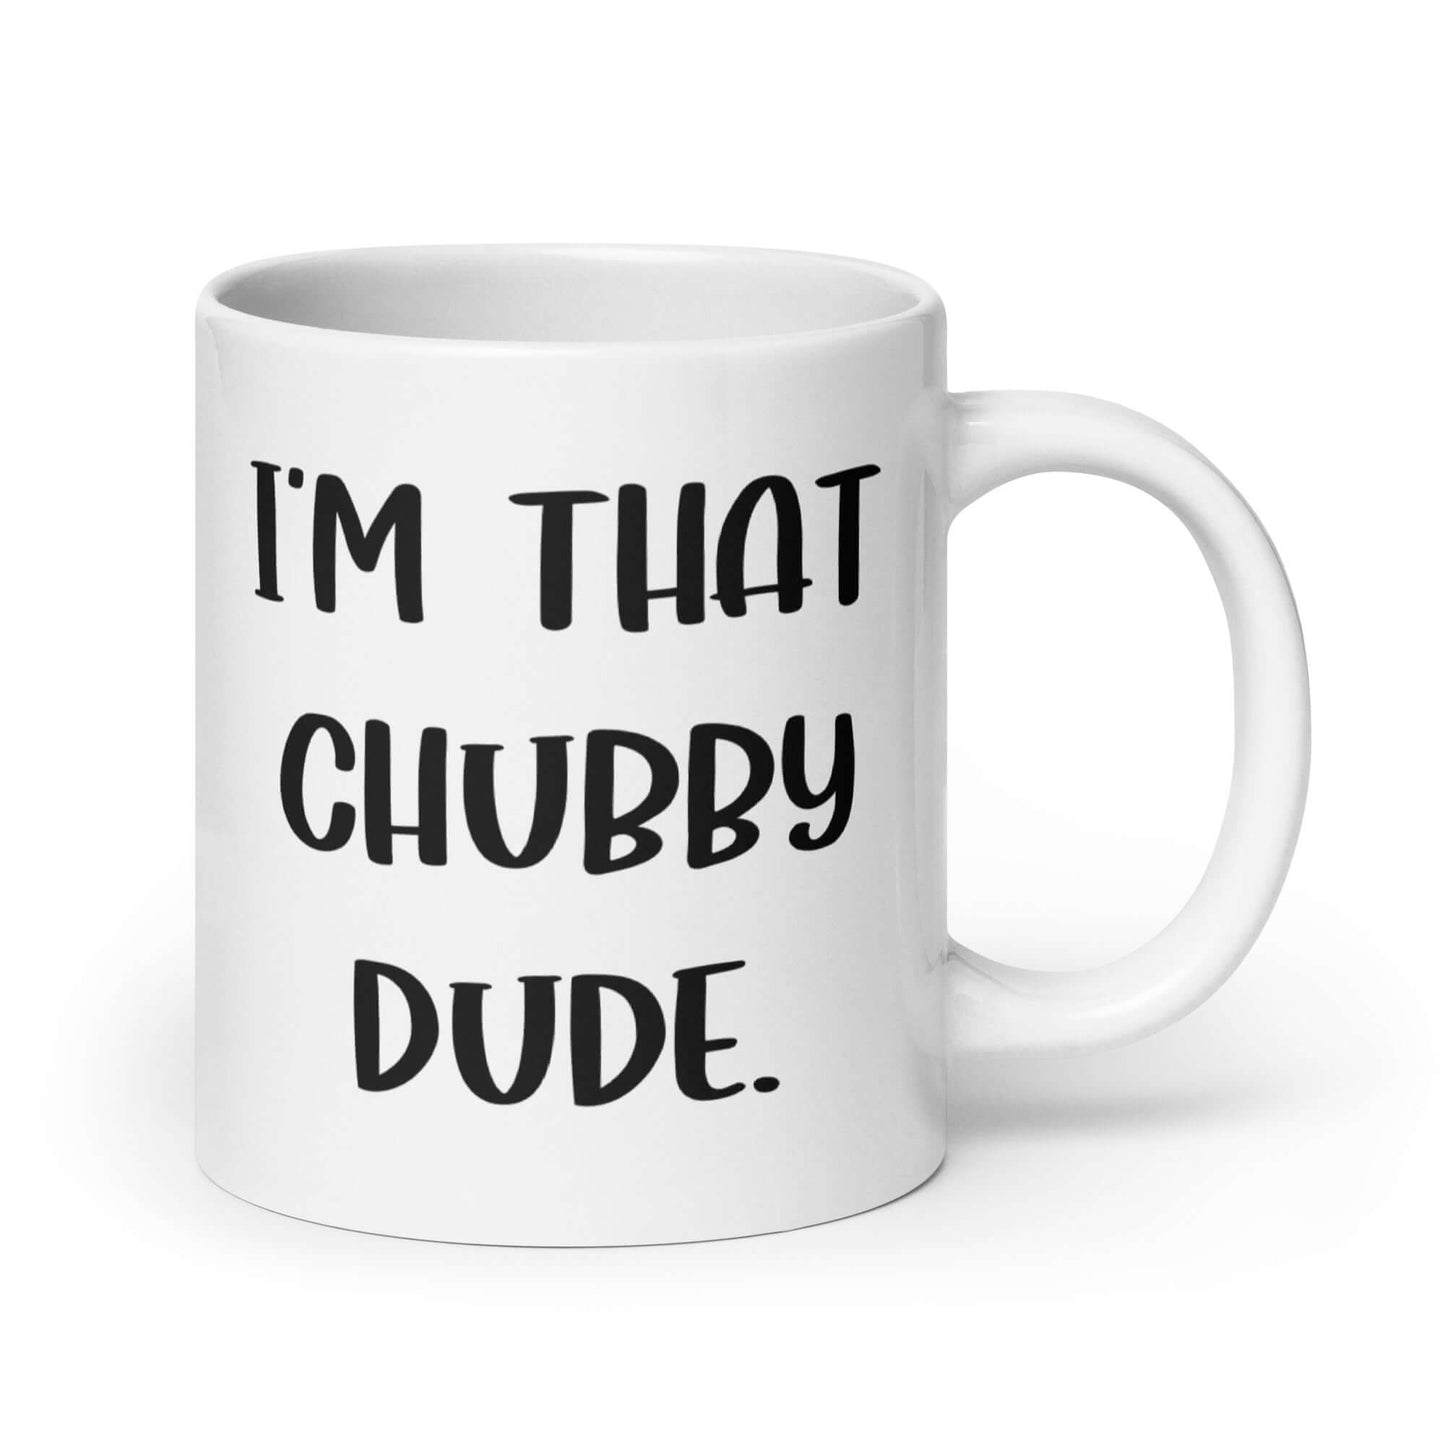 I'm that chubby dude funny mug.